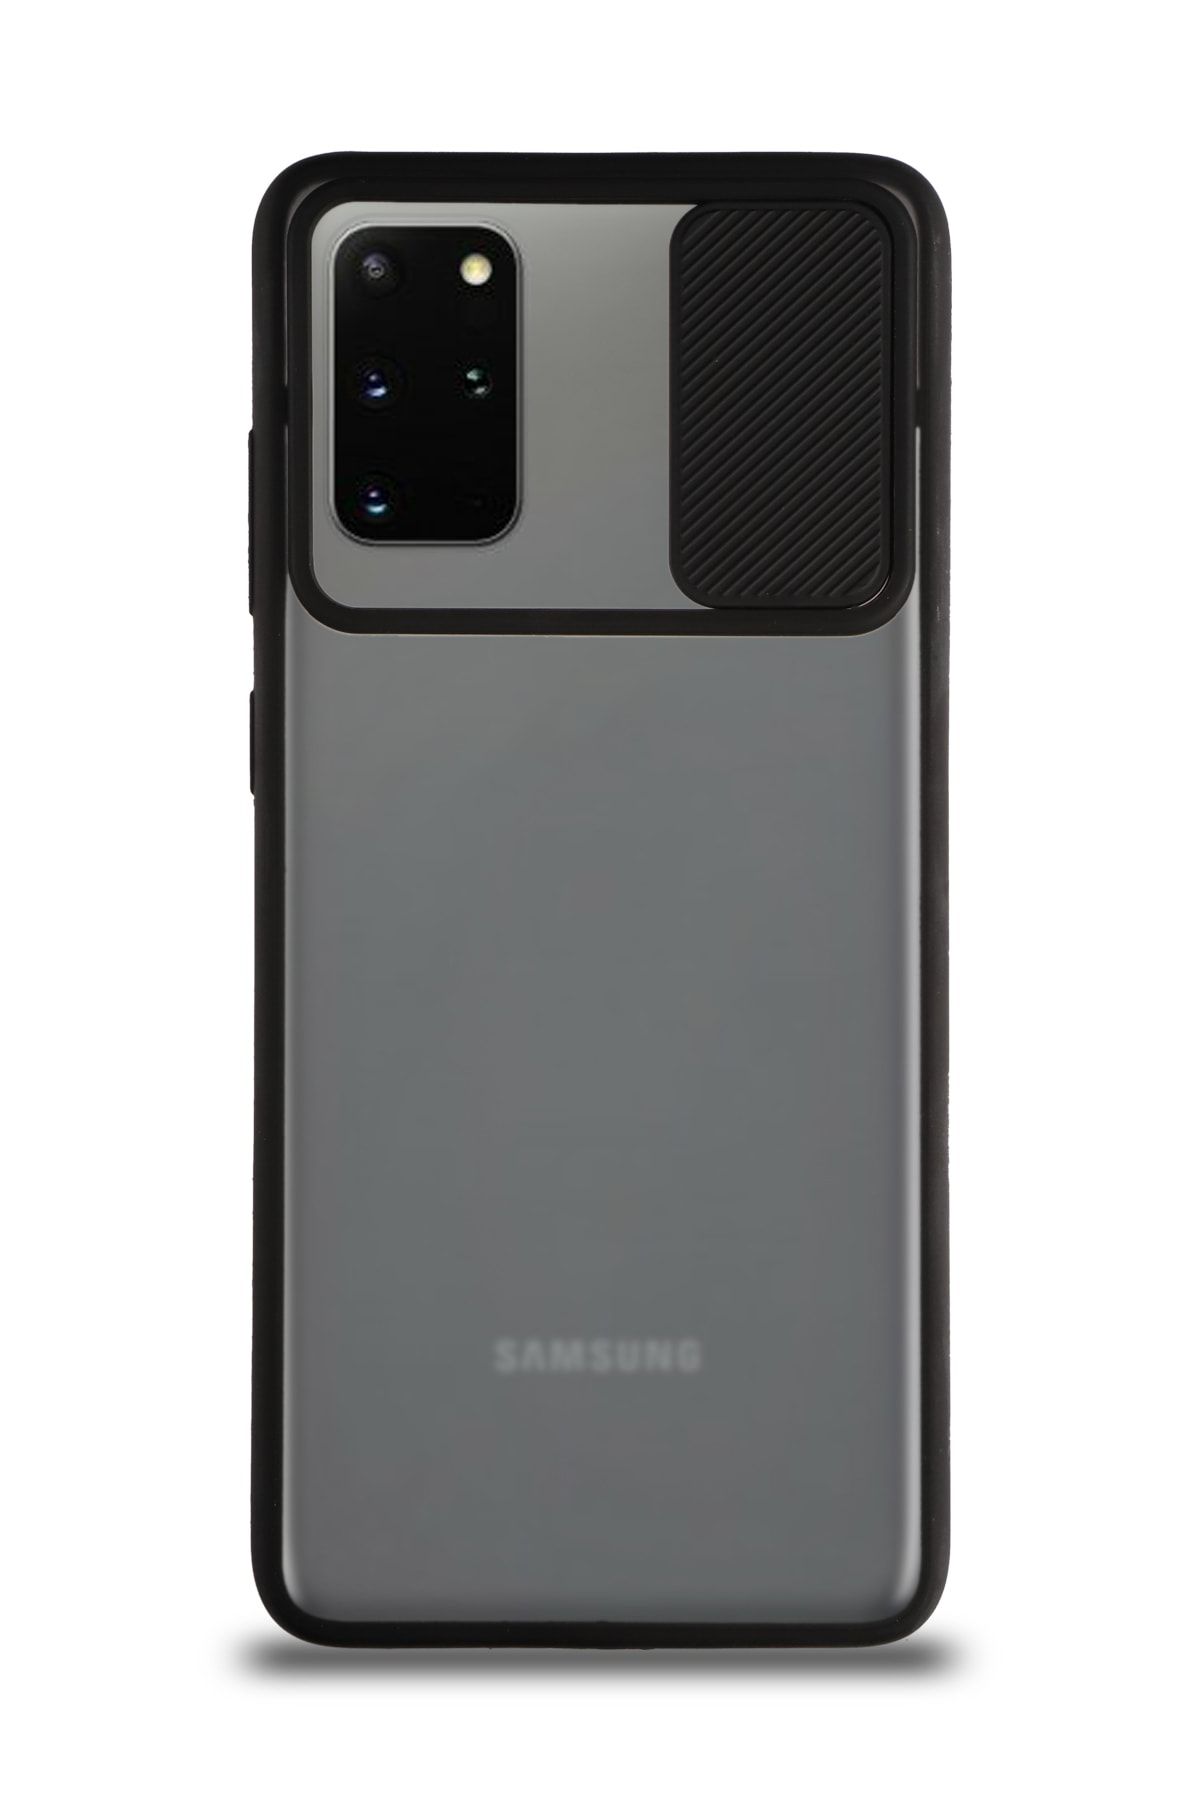 KZY İletişim Samsung Galaxy S20 Plus Uyumlu Kapak Lensi Açılır Kapanır Kamera Korumalı Silikon Kılıf - Siyah